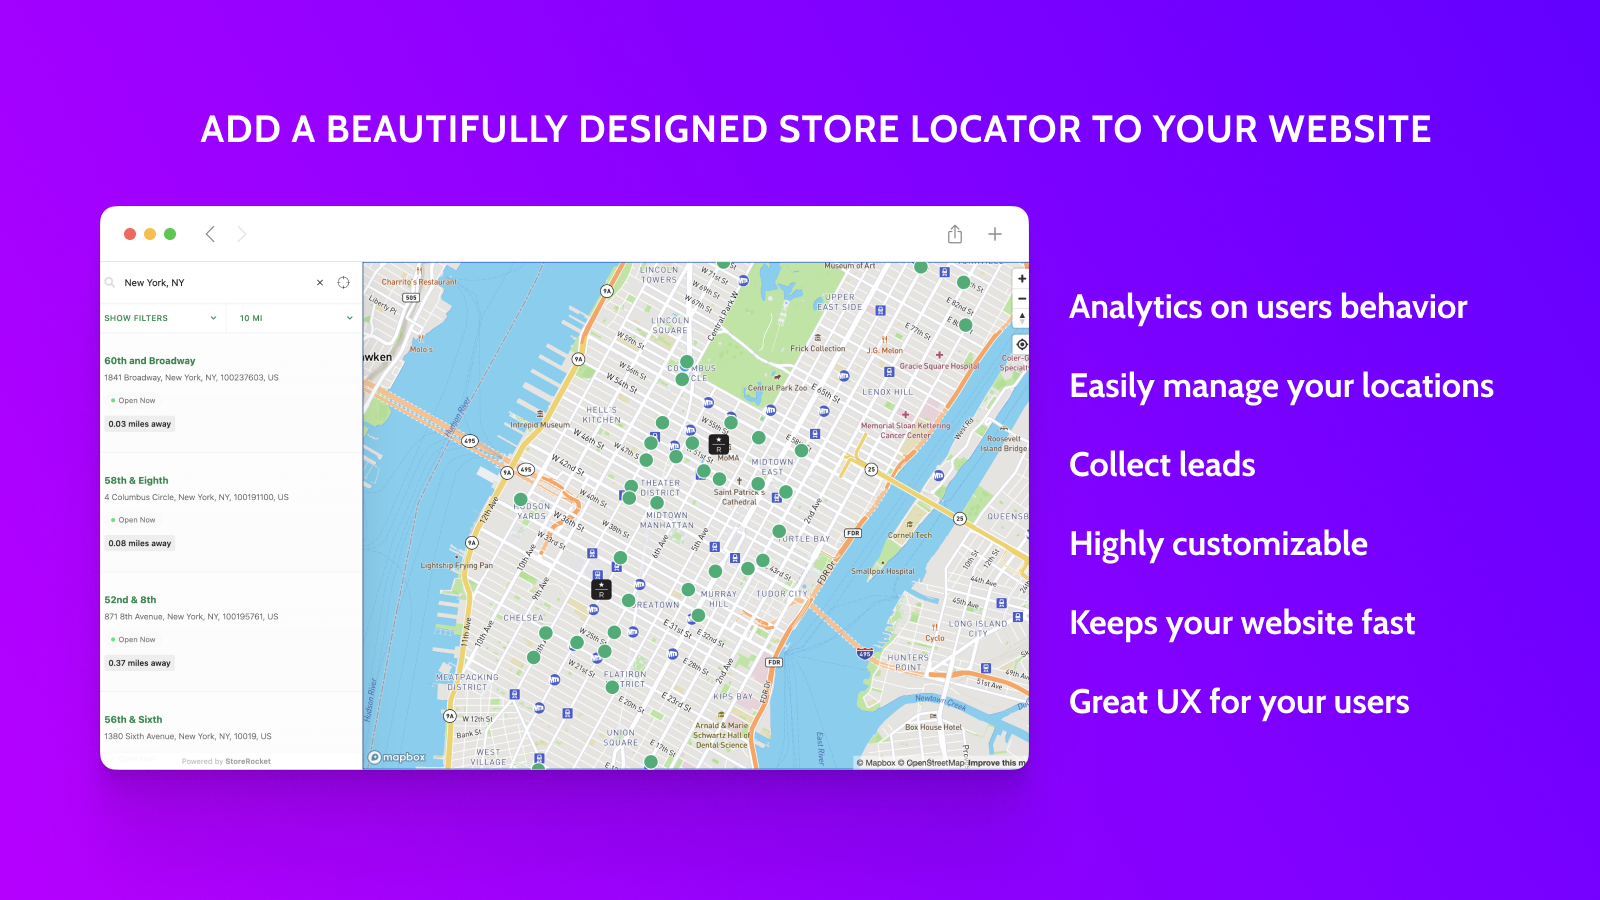 Tilføj en smukt designet butikslokator til din hjemmeside!